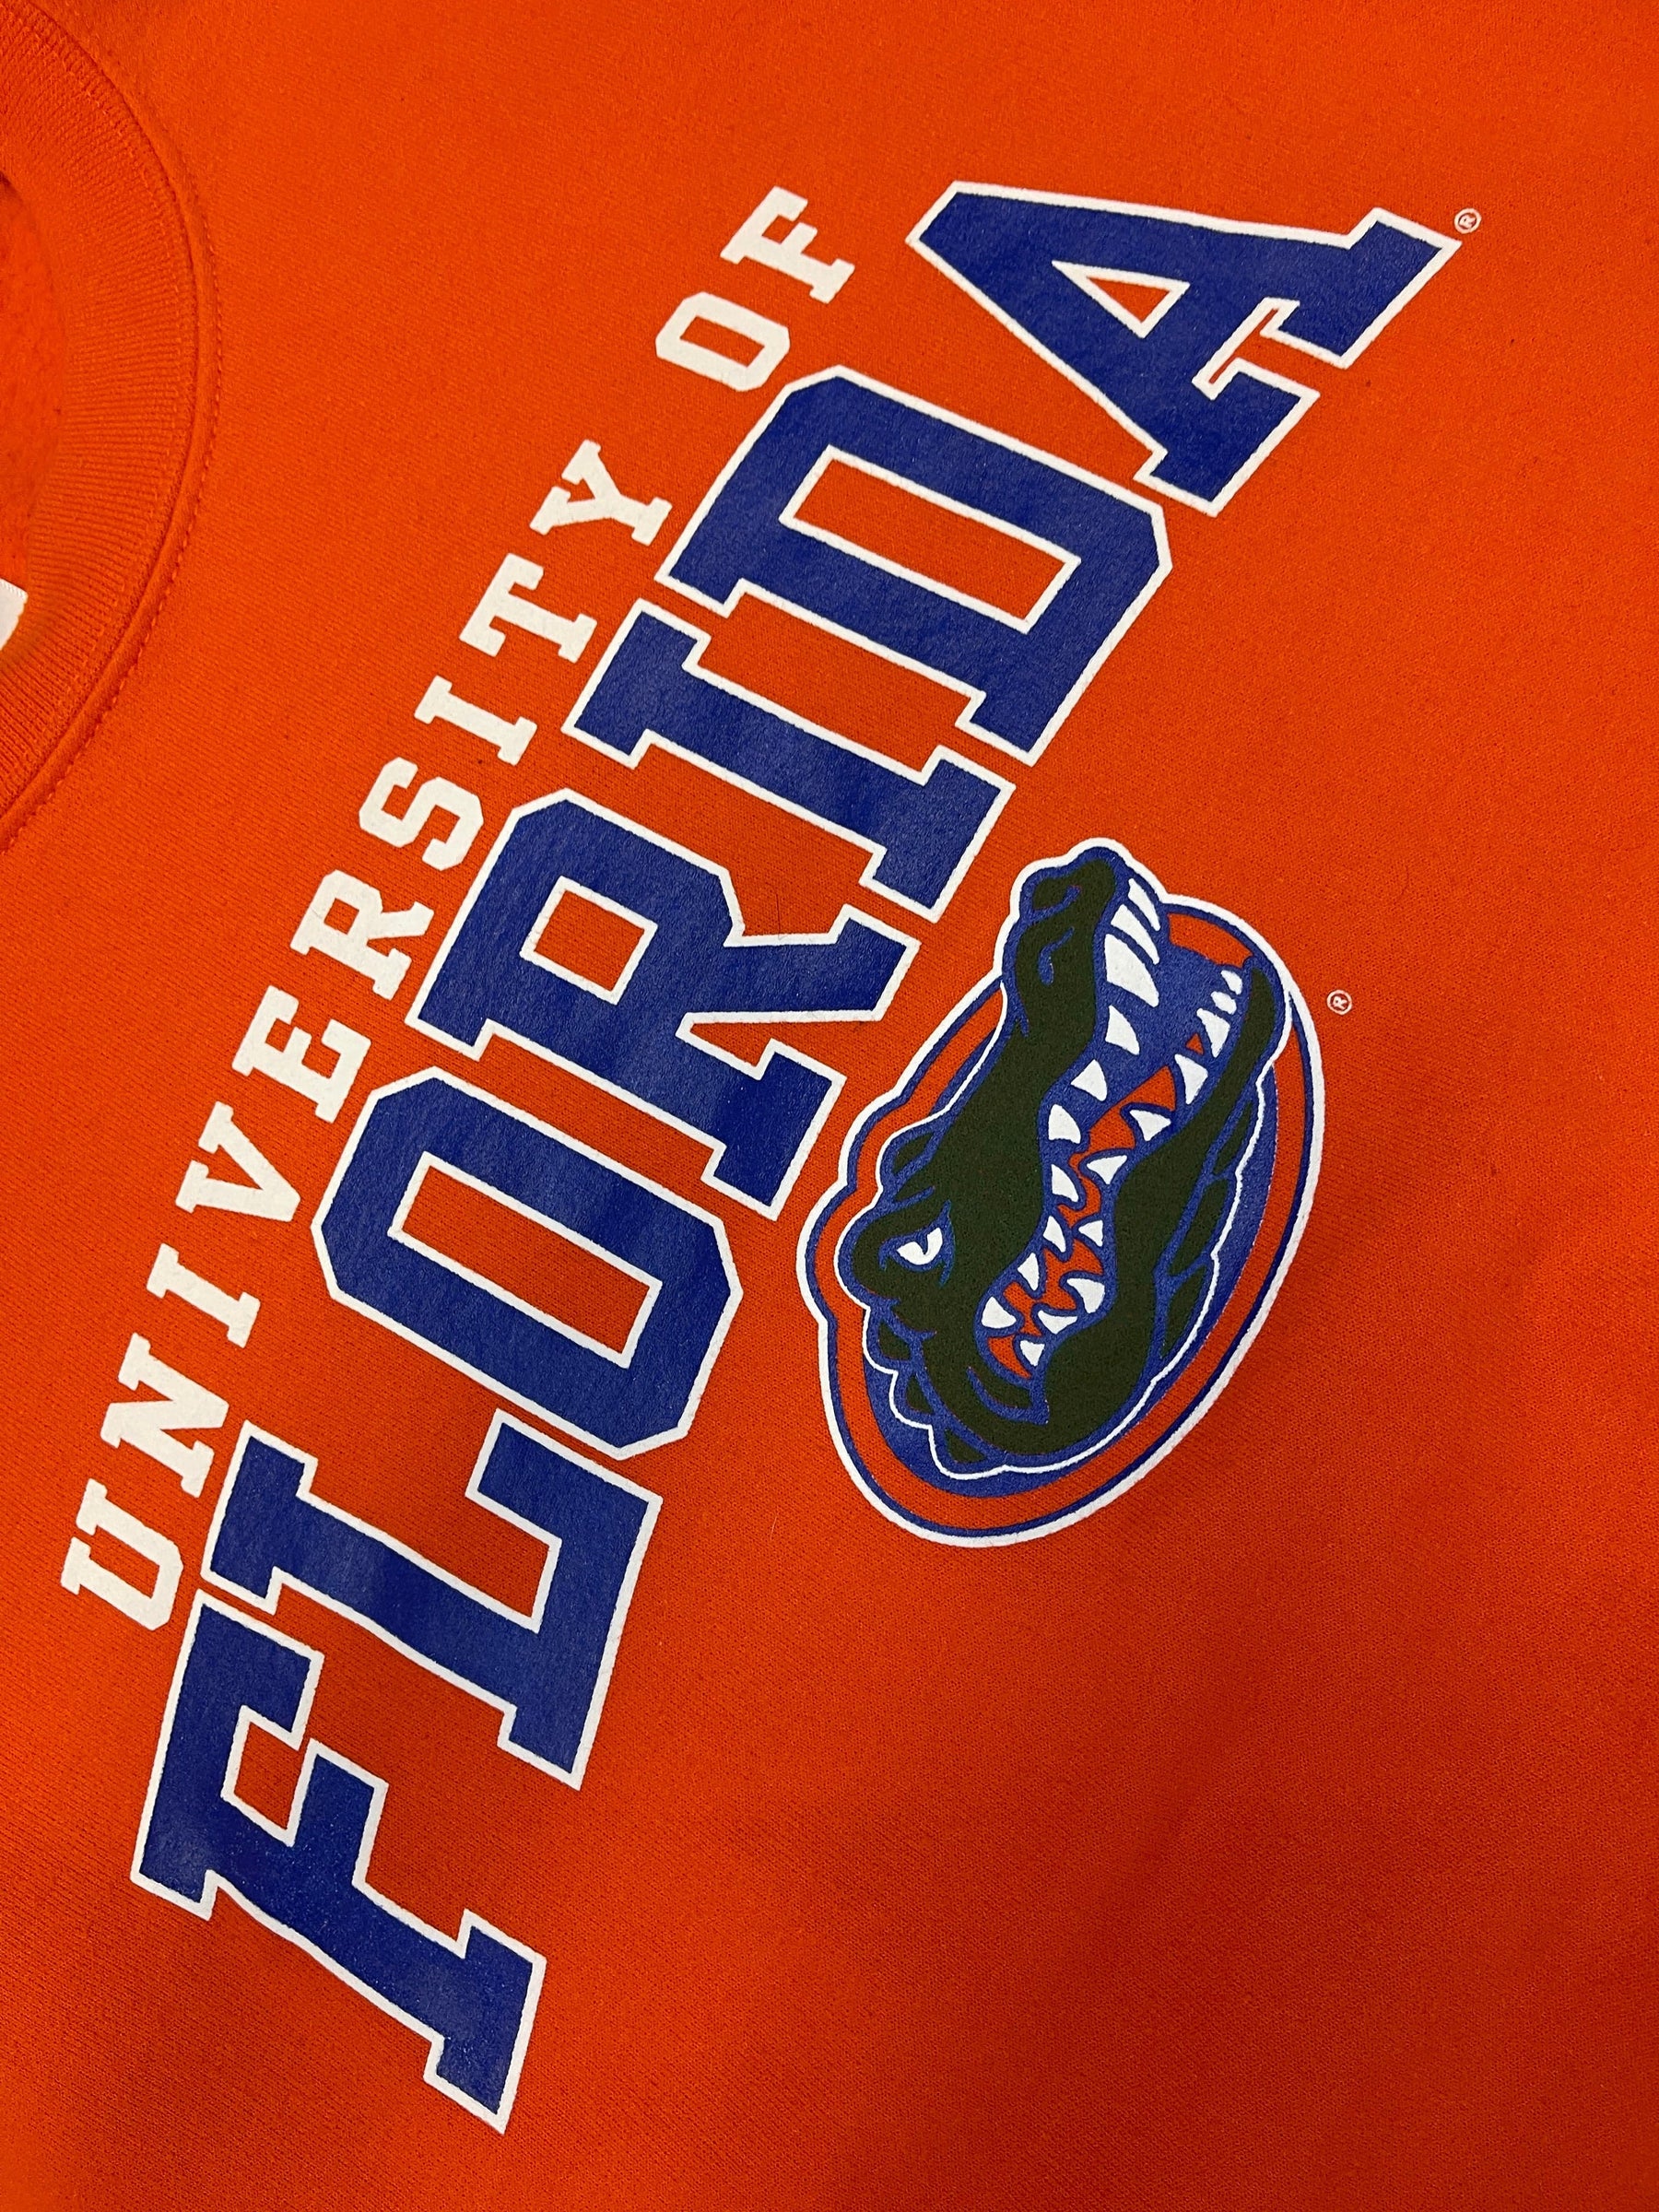 NCAA Florida Gators Orange Pullover Sweatshirt Men's Medium